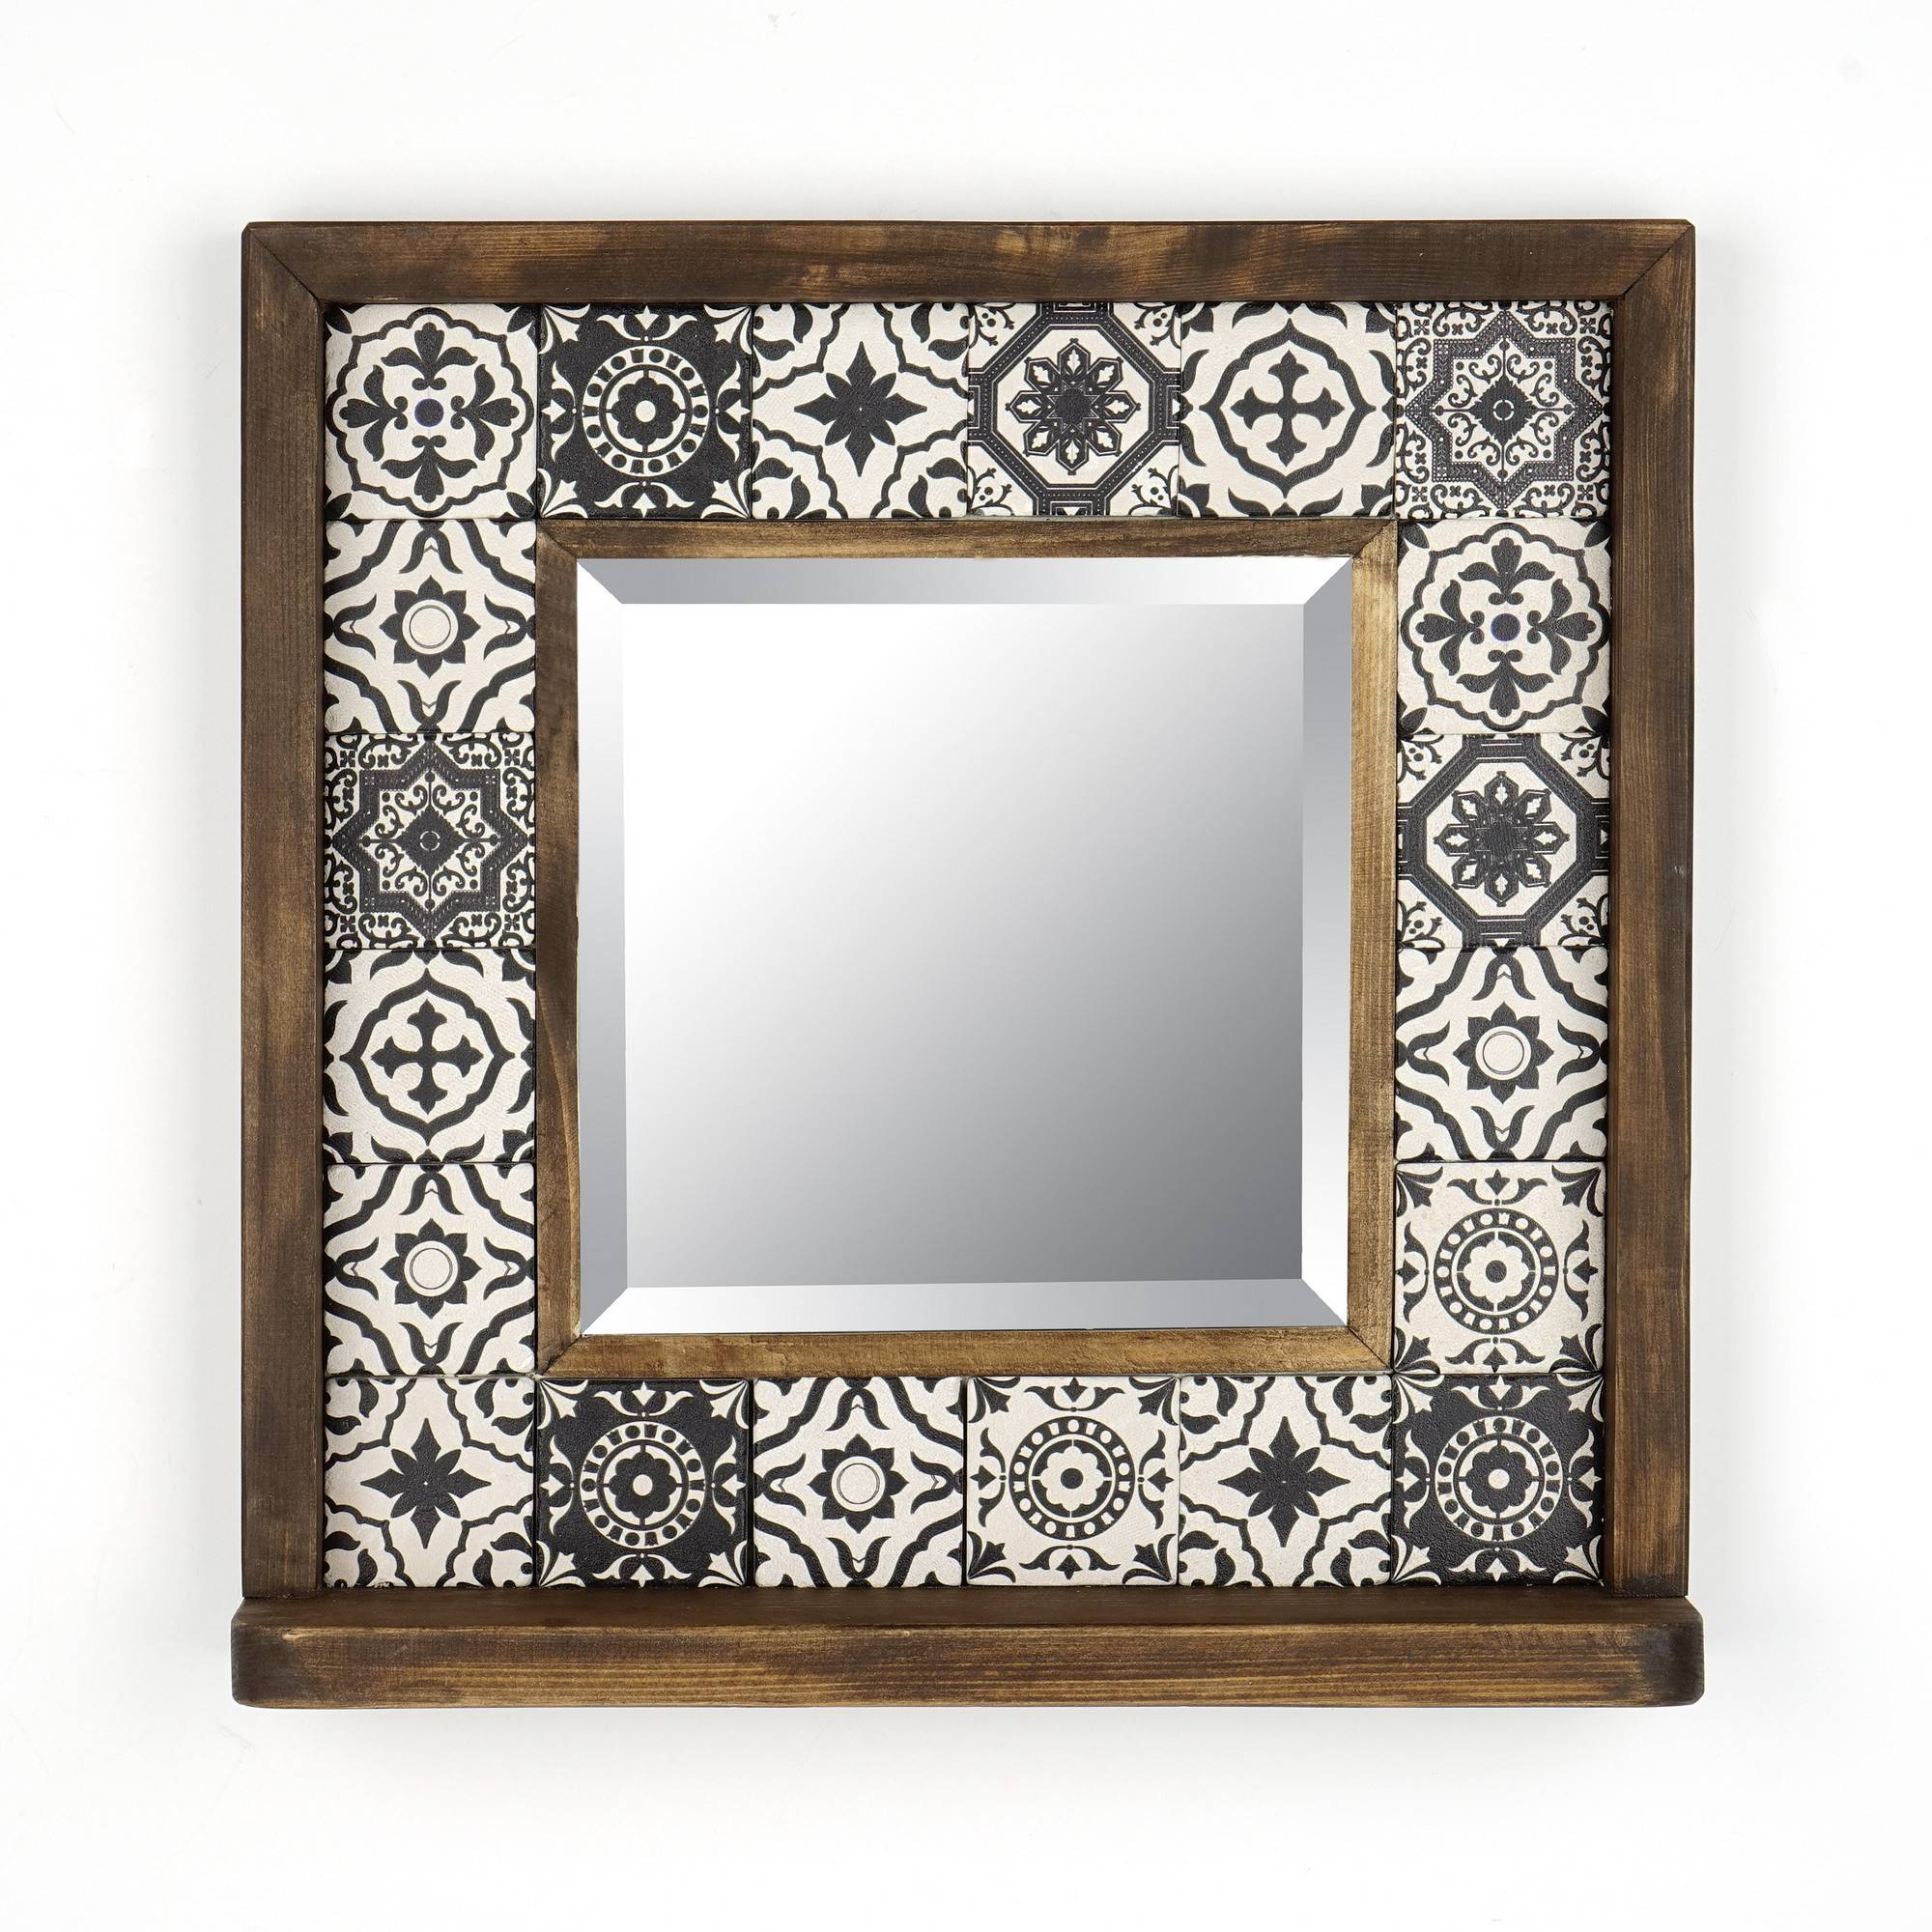 Dallat espejo de pared W32,5xH33cm Madera maciza Oscuro Arabesco patrón Blanco y Negro